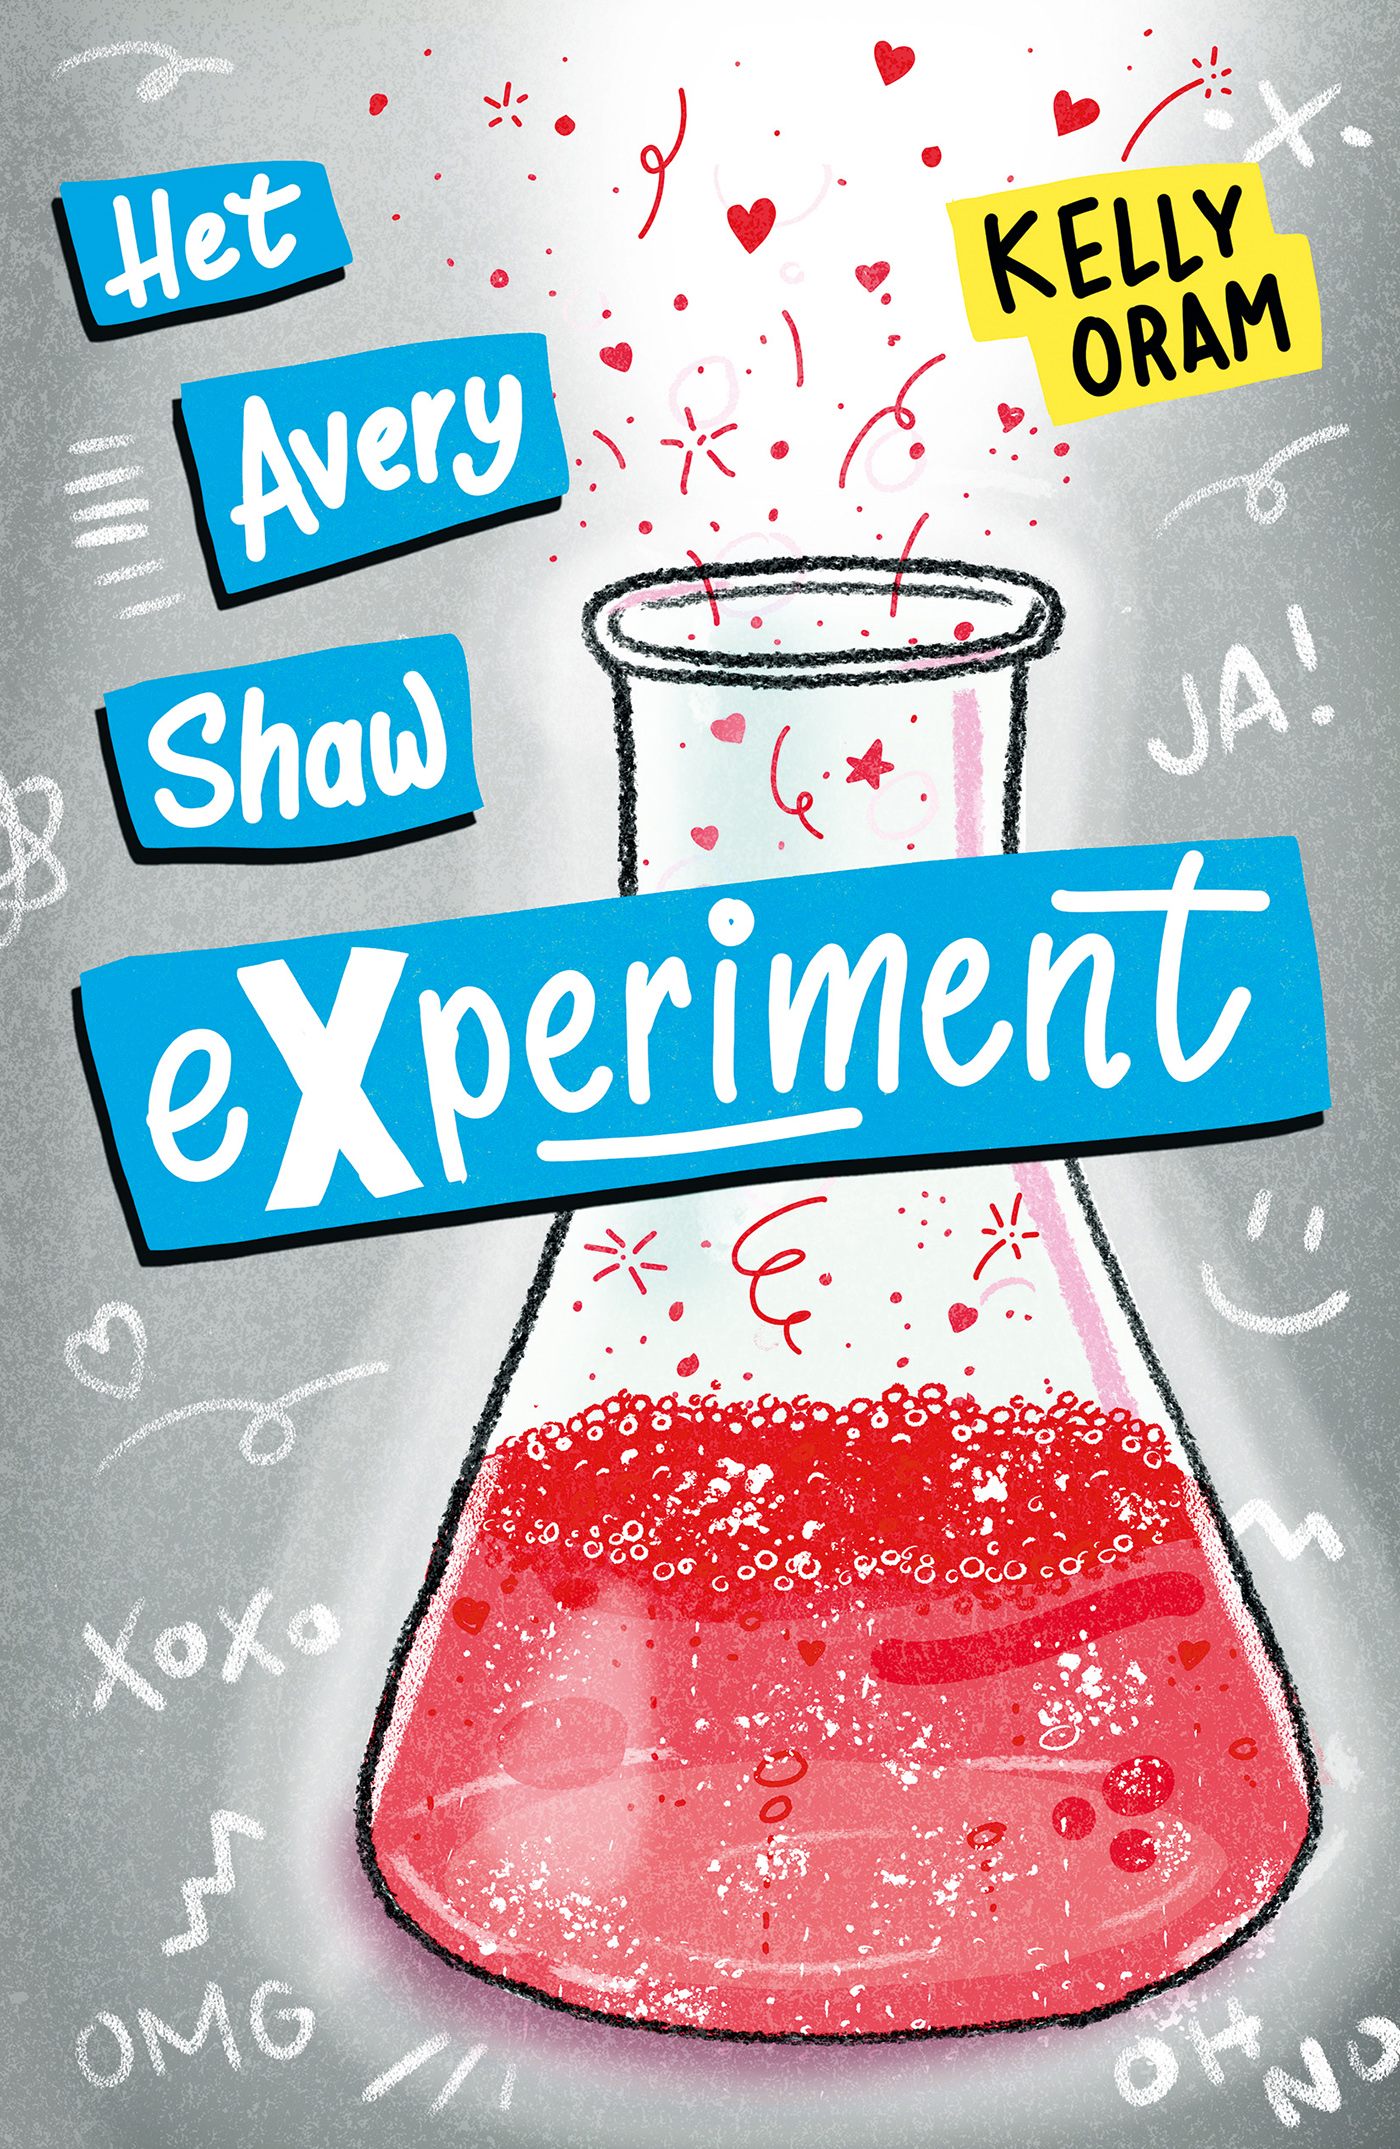 Het X-experiment 1 -   Het Avery Shaw-experiment